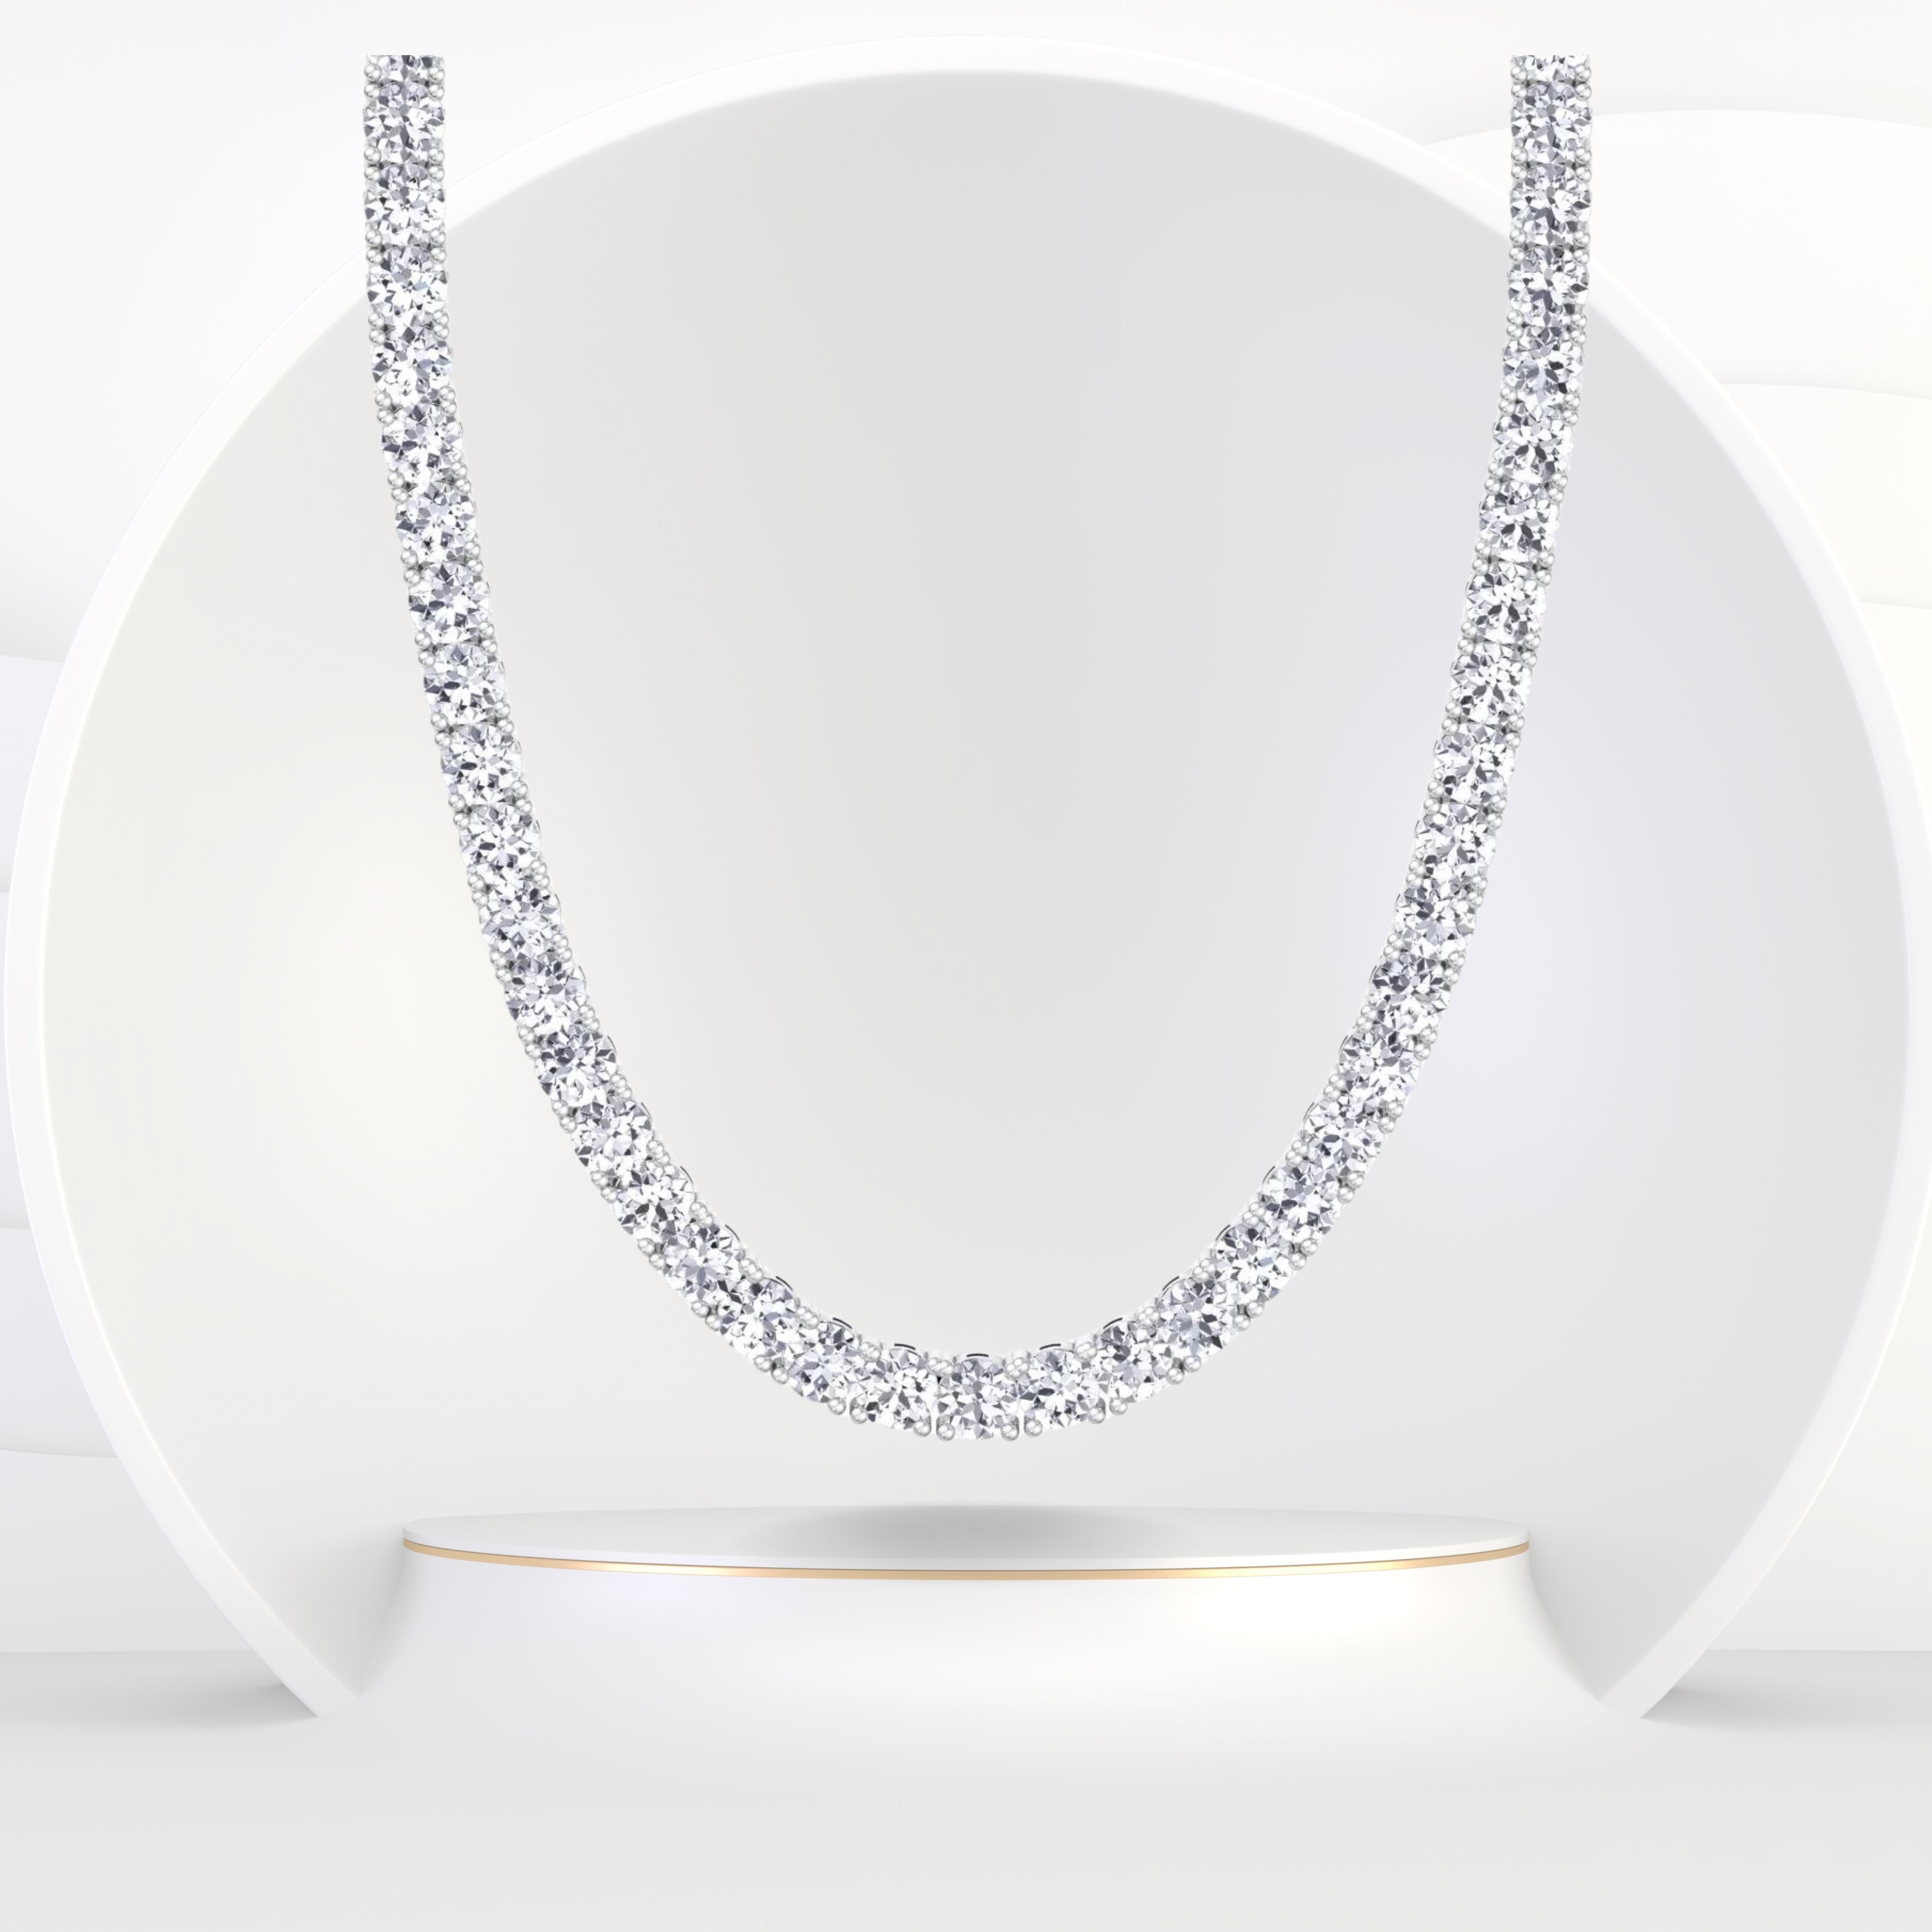 Rare 12 Ct Certified! Beautiful Black Diamond Pendant With Diamond Accents.  Great Design | ZeeDiamonds